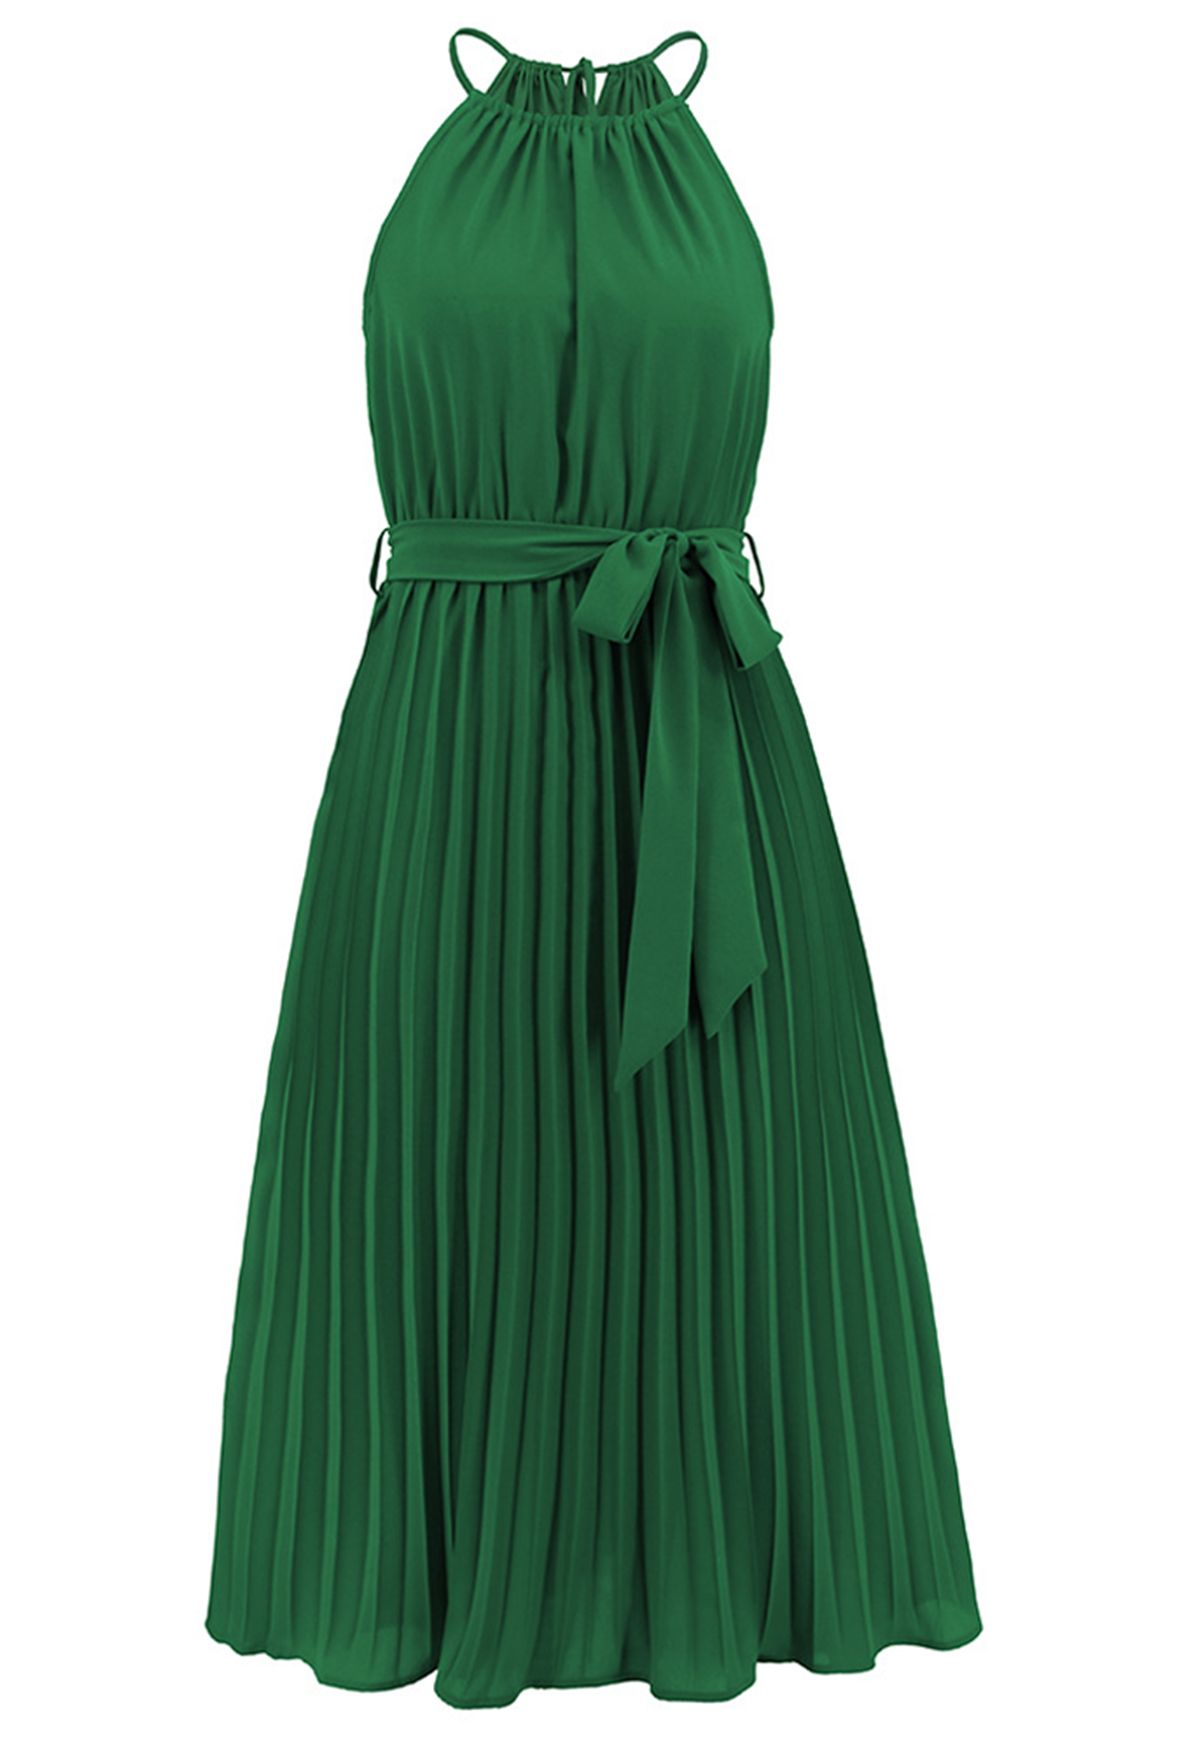 Halter Neck Tie Waist Pleated Dress in Green - Retro, Indie and Unique ...